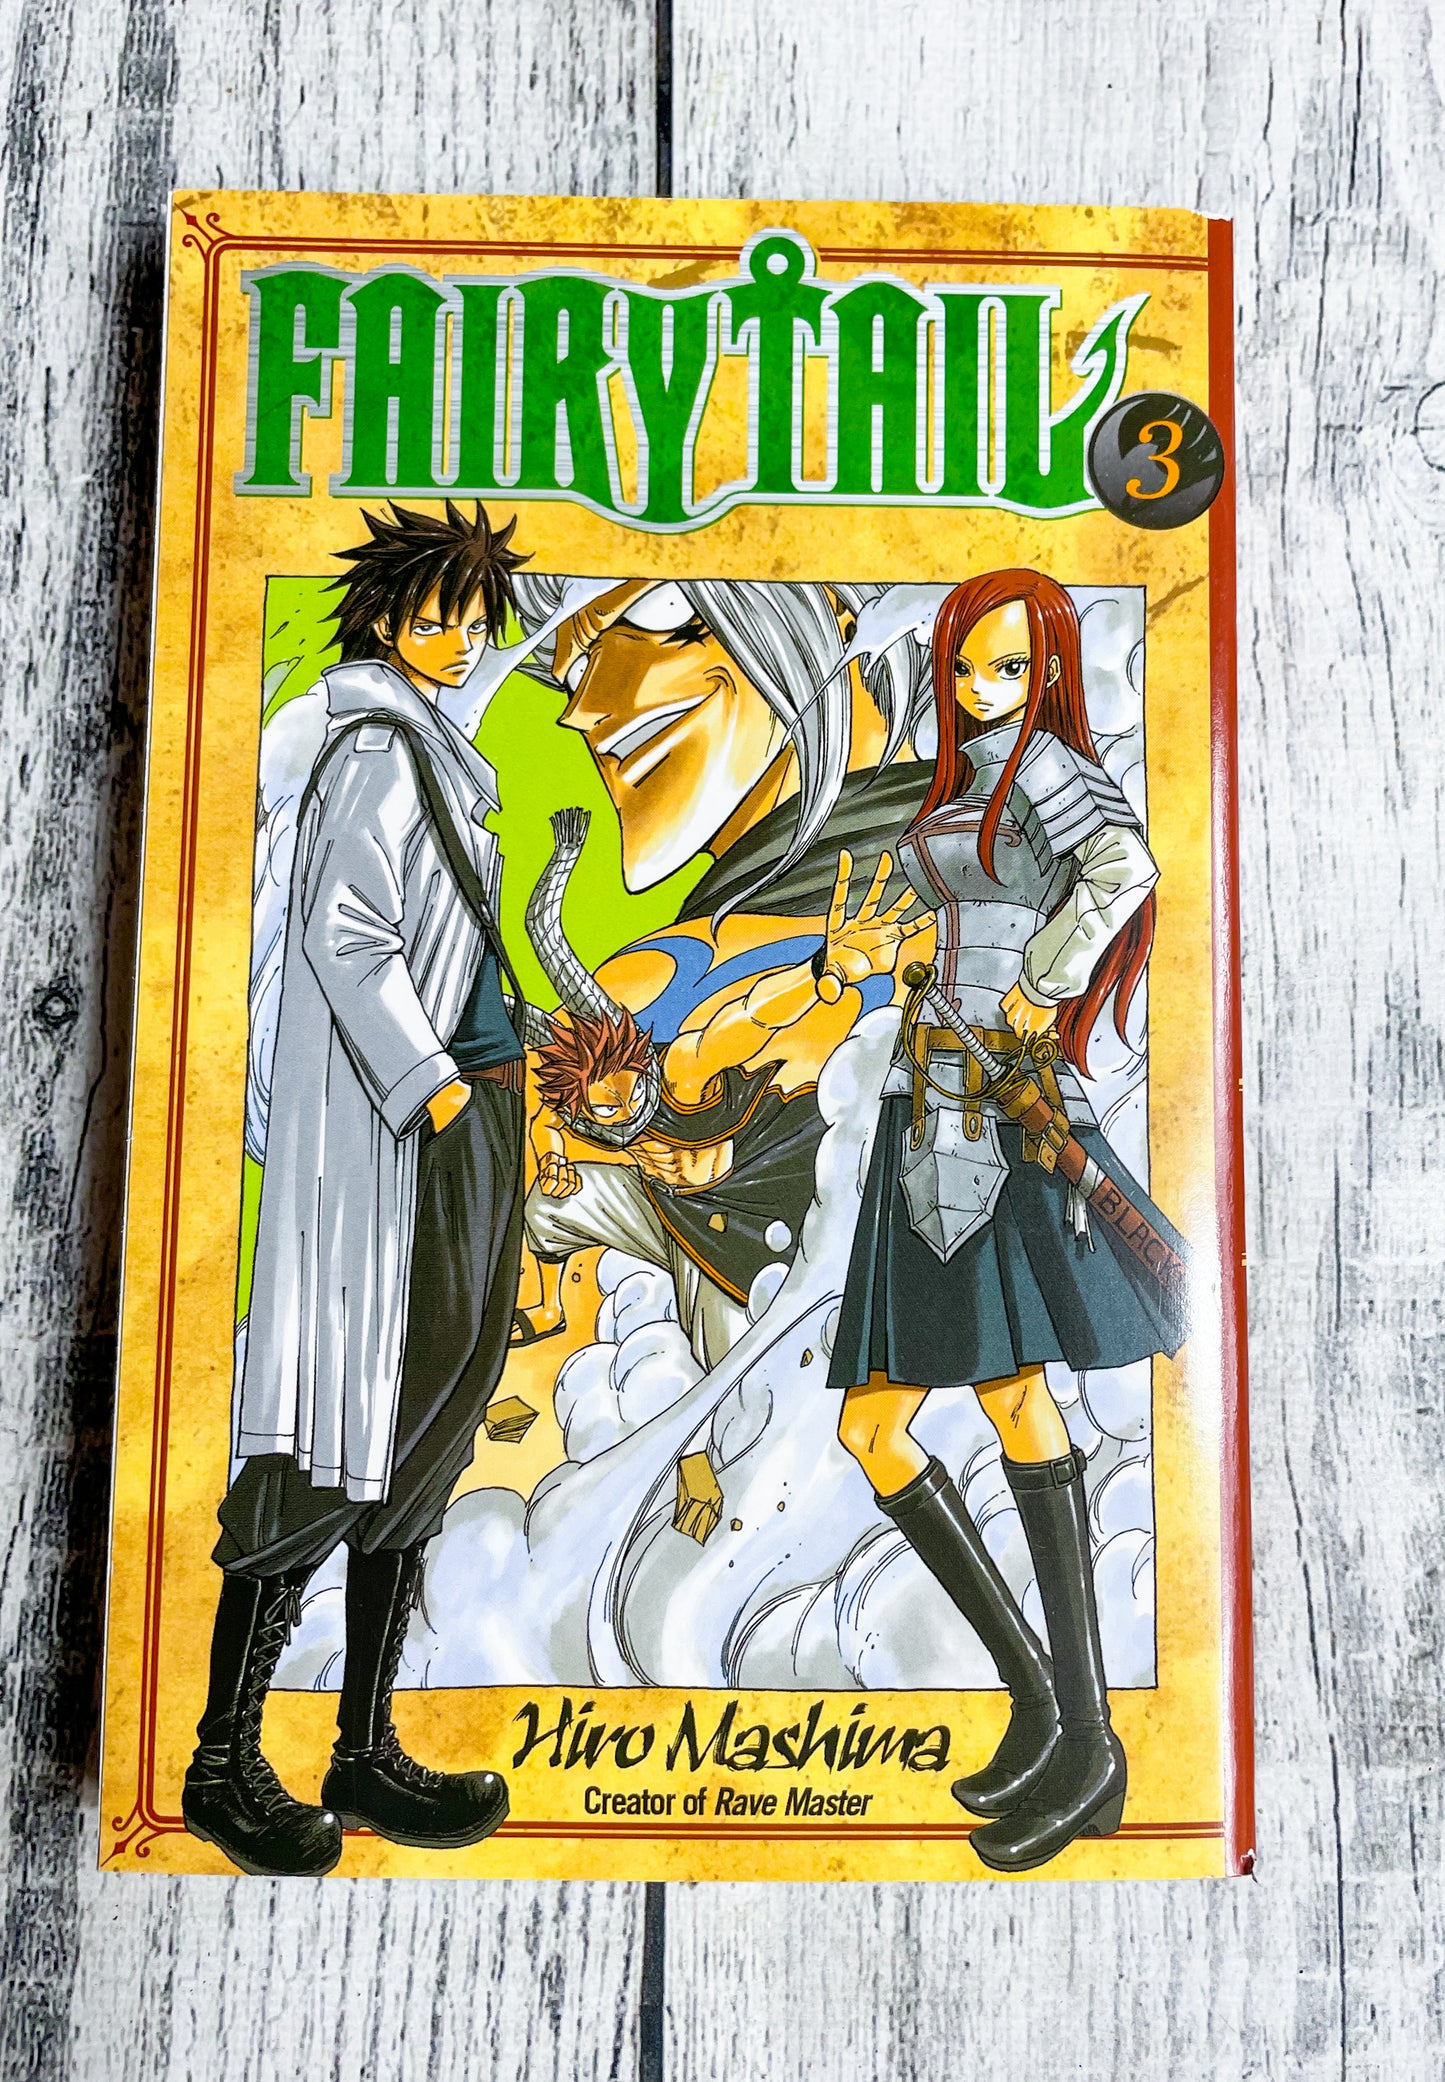 Fairytail Vol 3 by Hiro Mashima